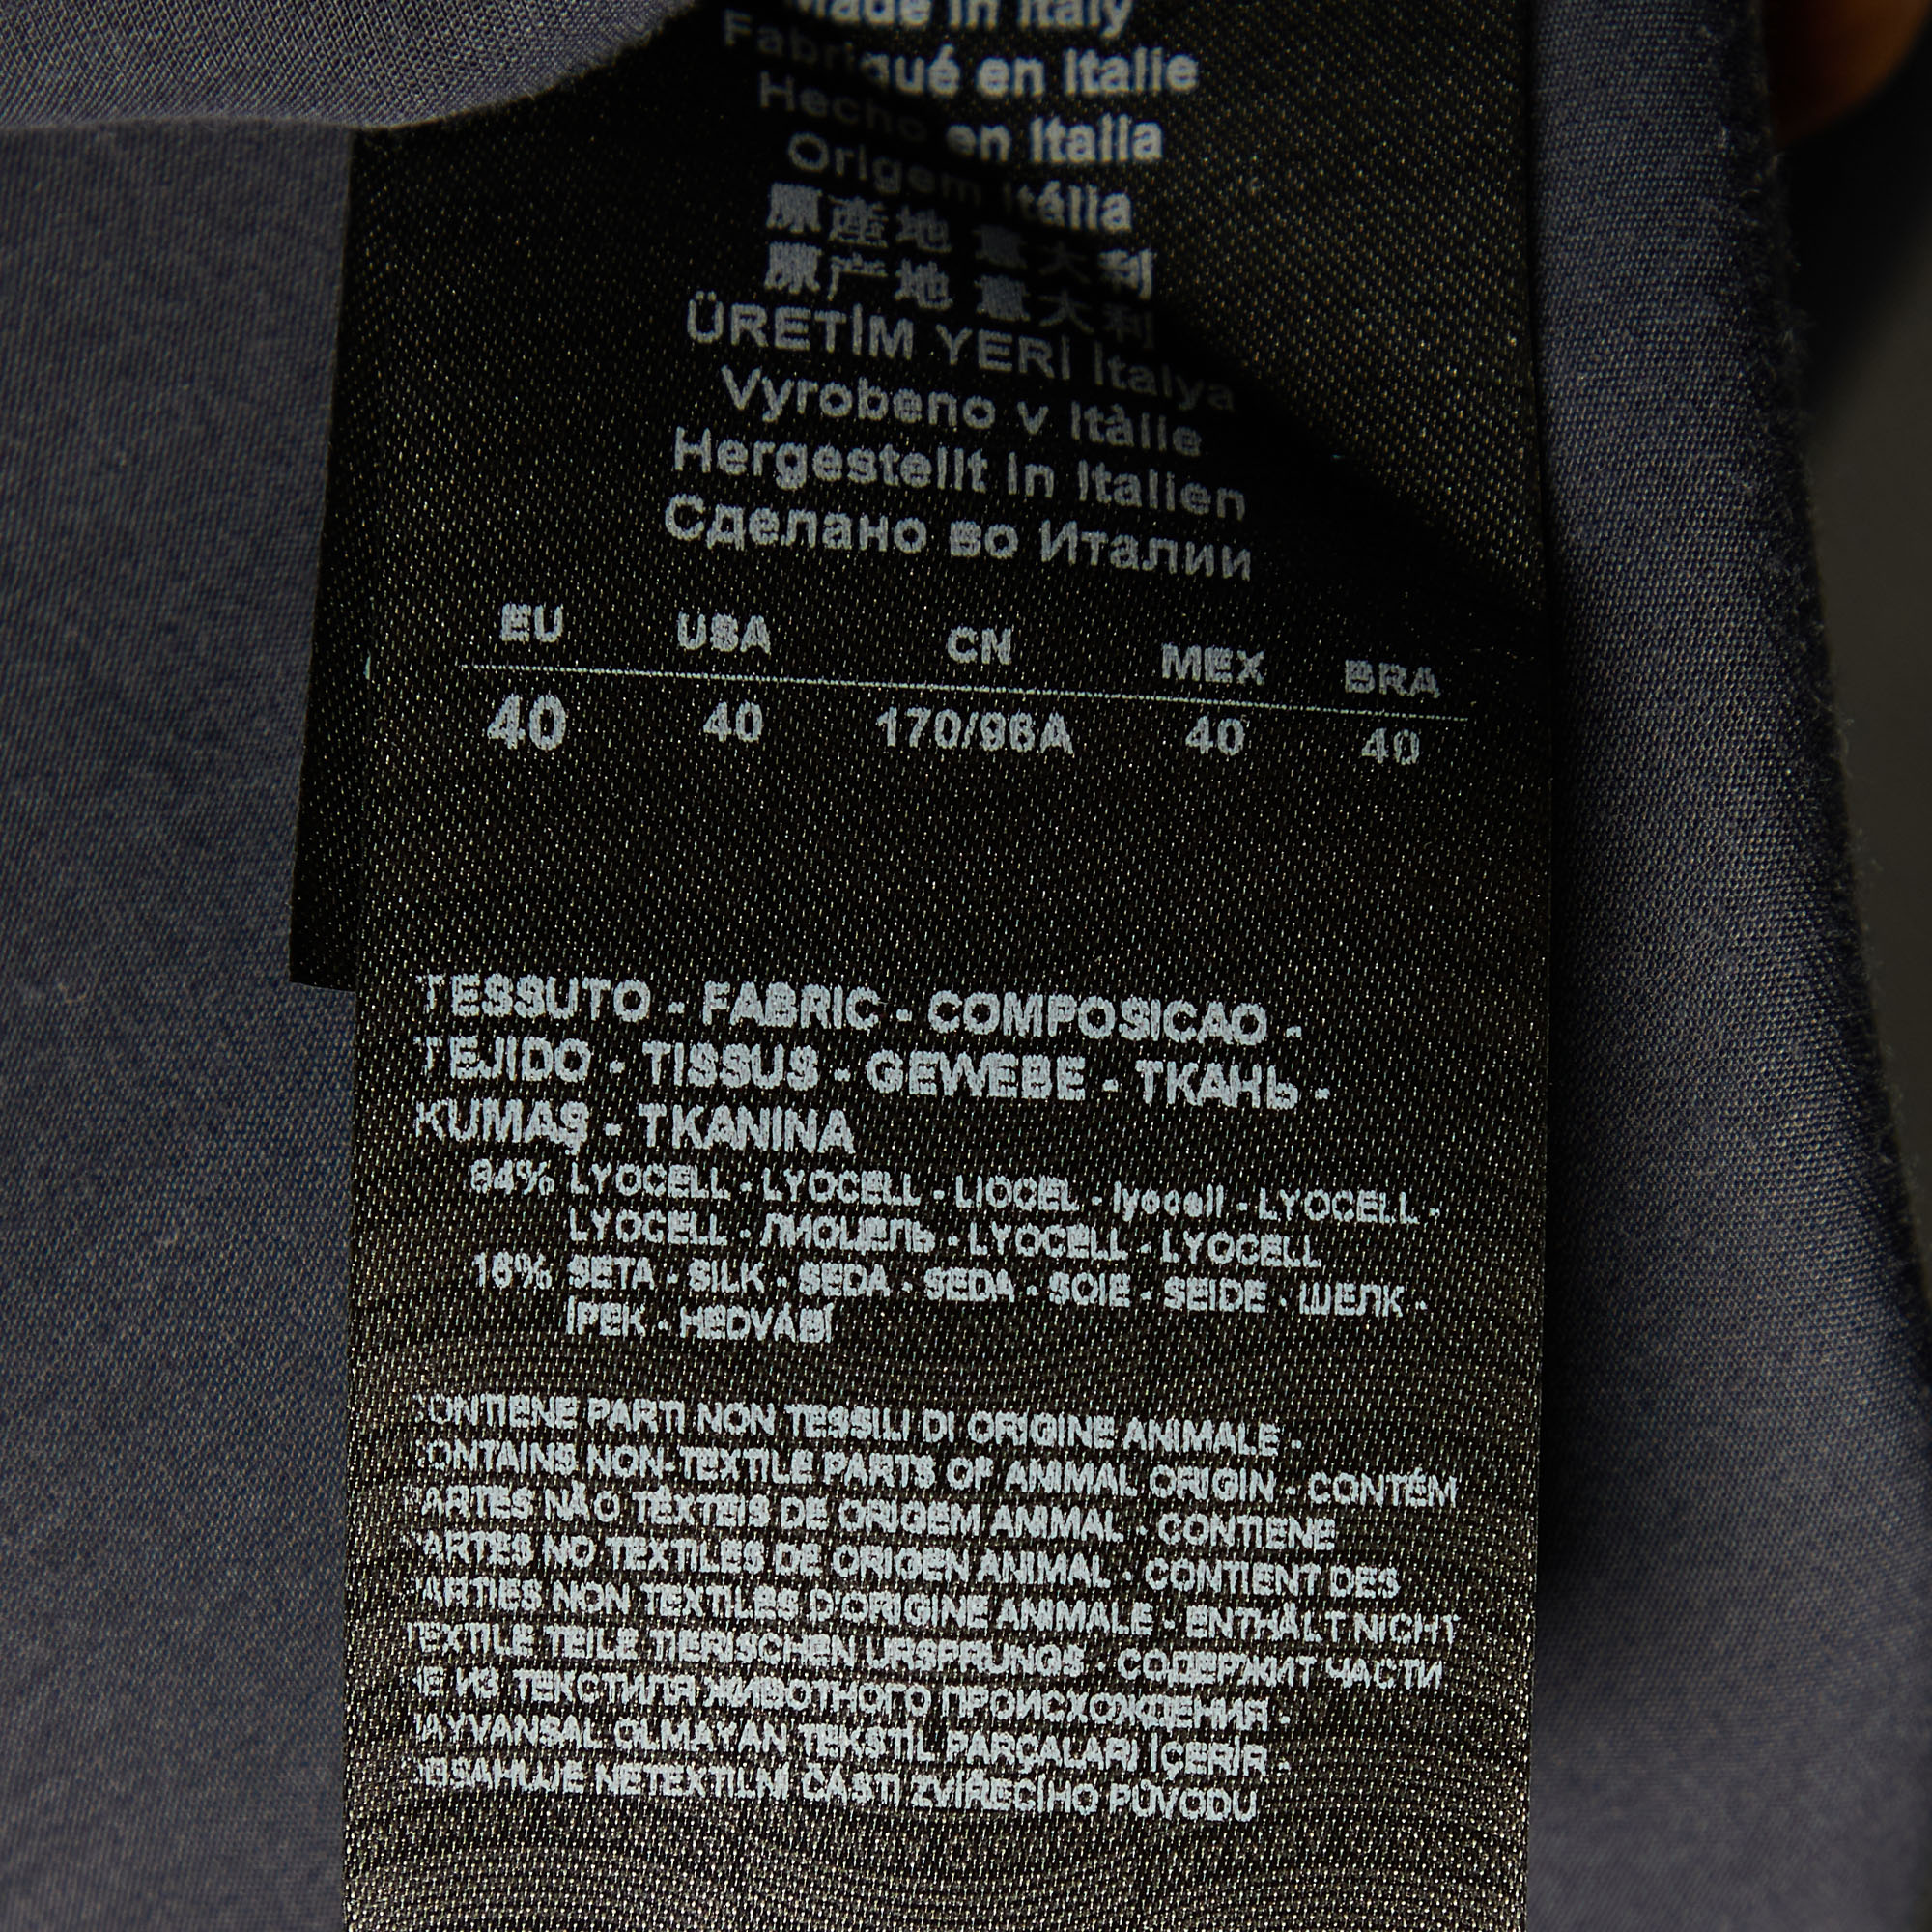 Giorgio Armani Navy Blue Lyocell & Silk Button Front Shirt L